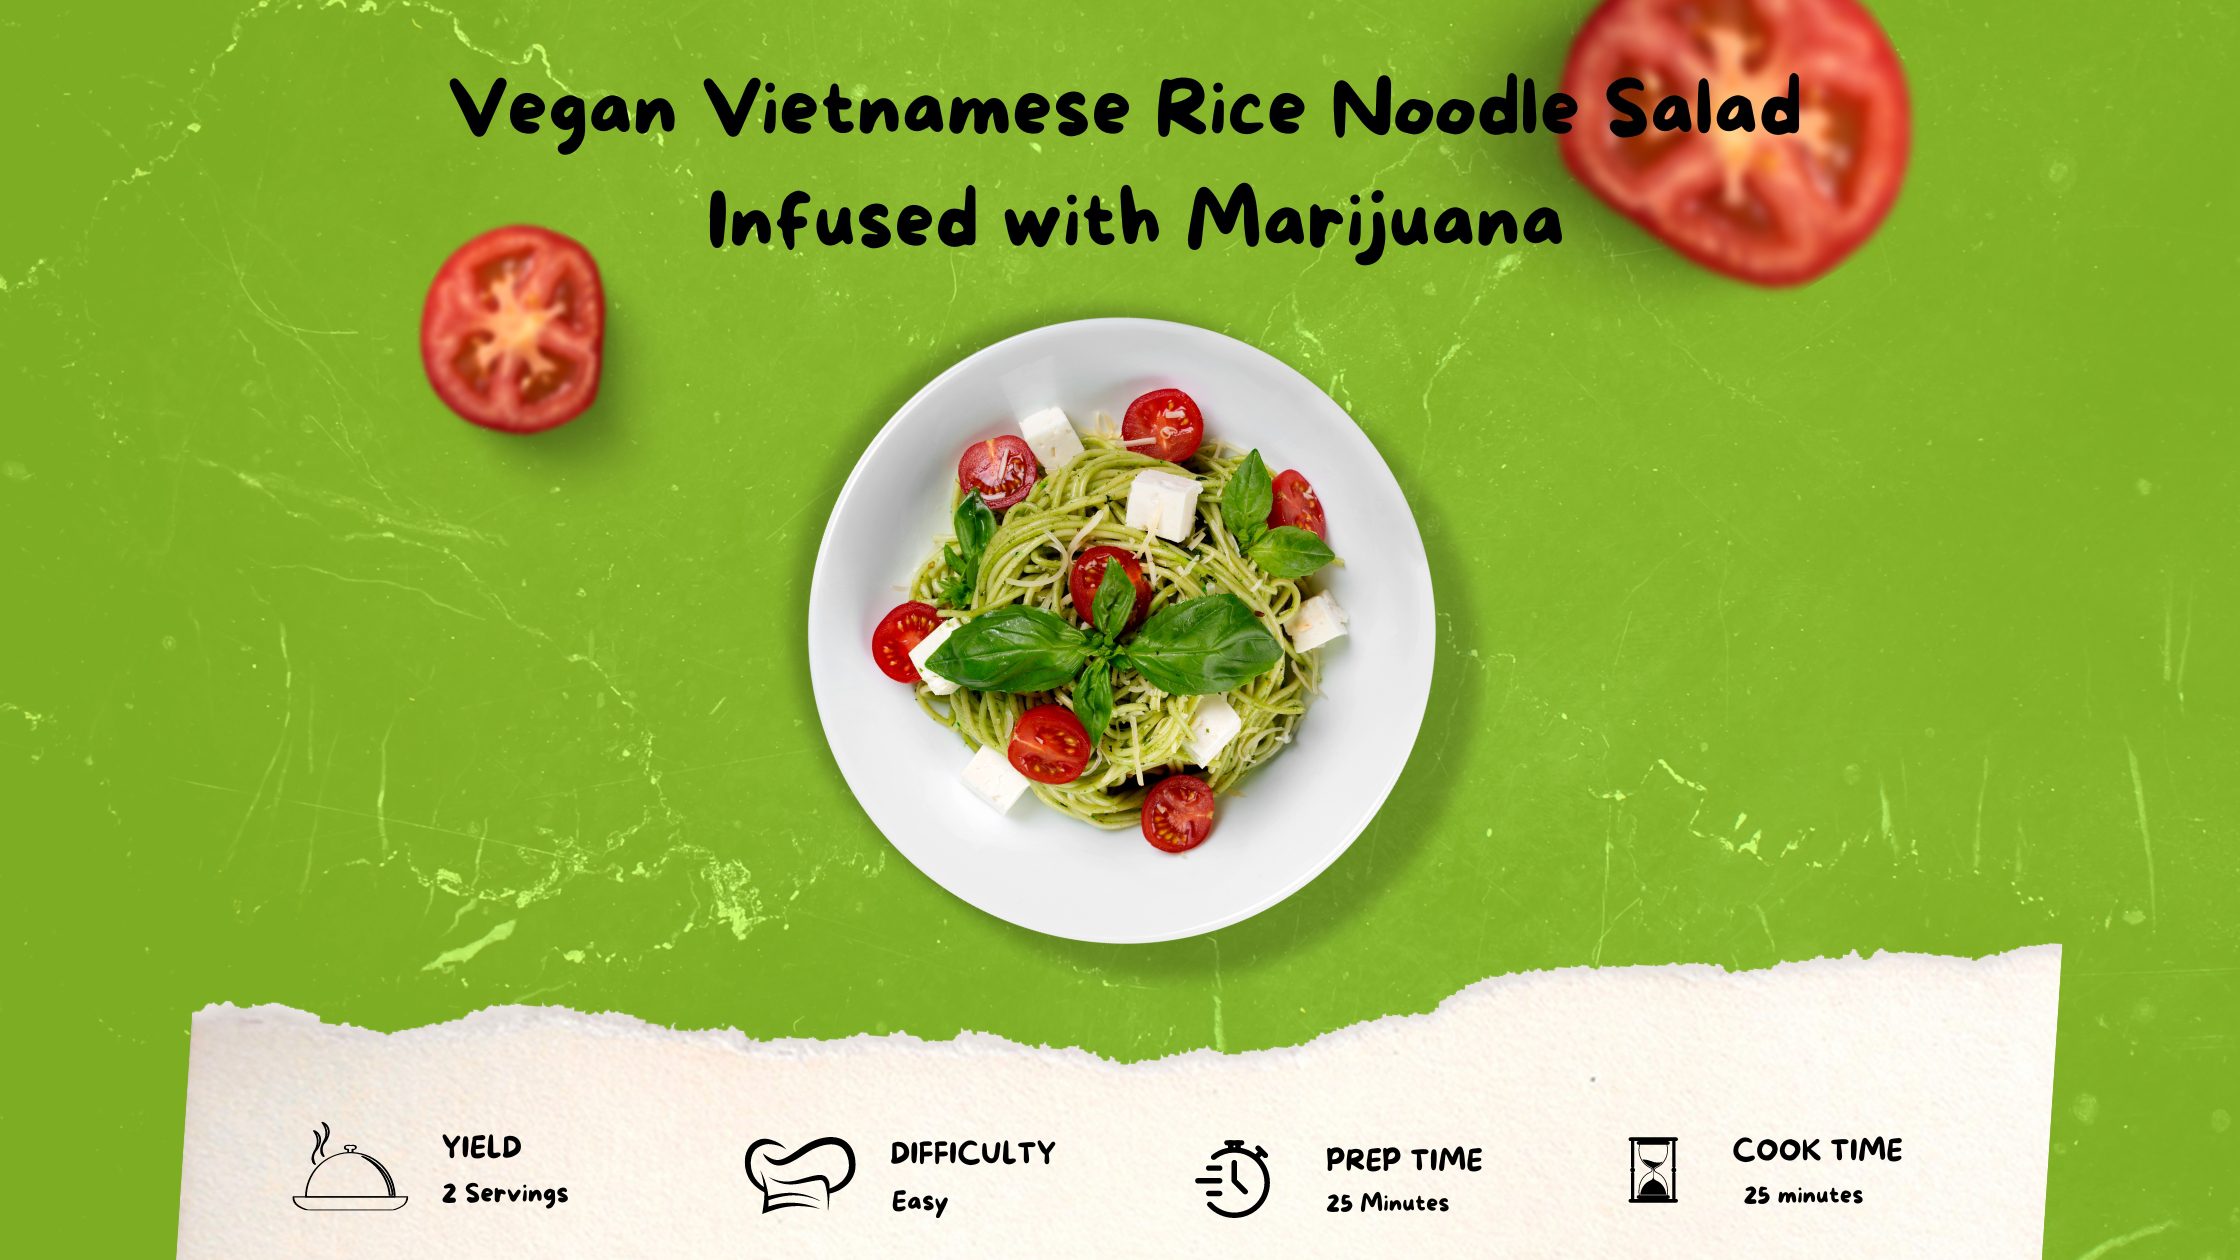 Vegan Vietnamese Rice Noodle Salad Infused with Marijuana